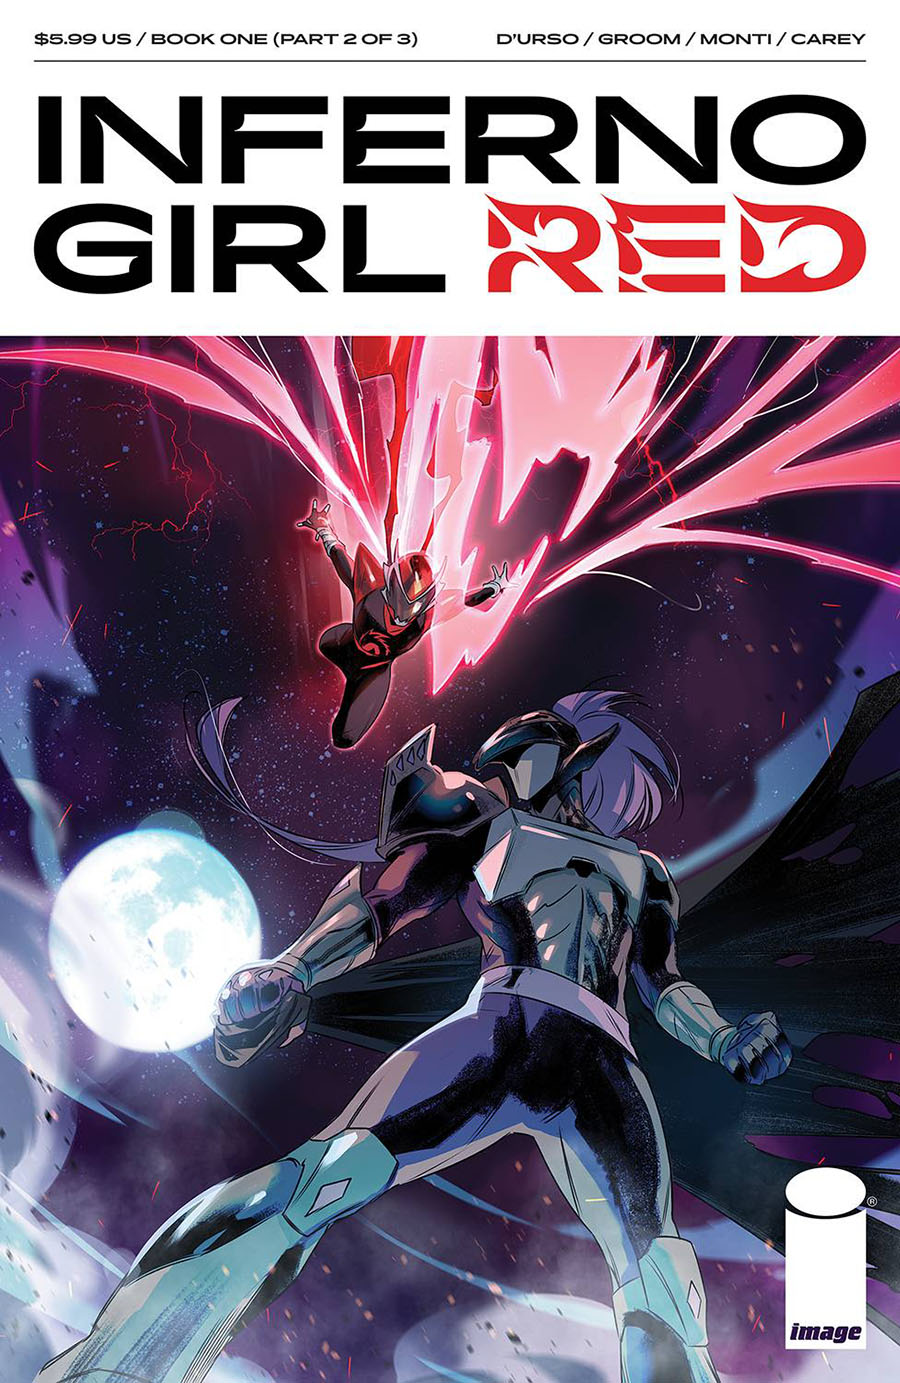 Inferno Girl Red Book 1 #2 Cover A Regular Valeria Favoccia Cover